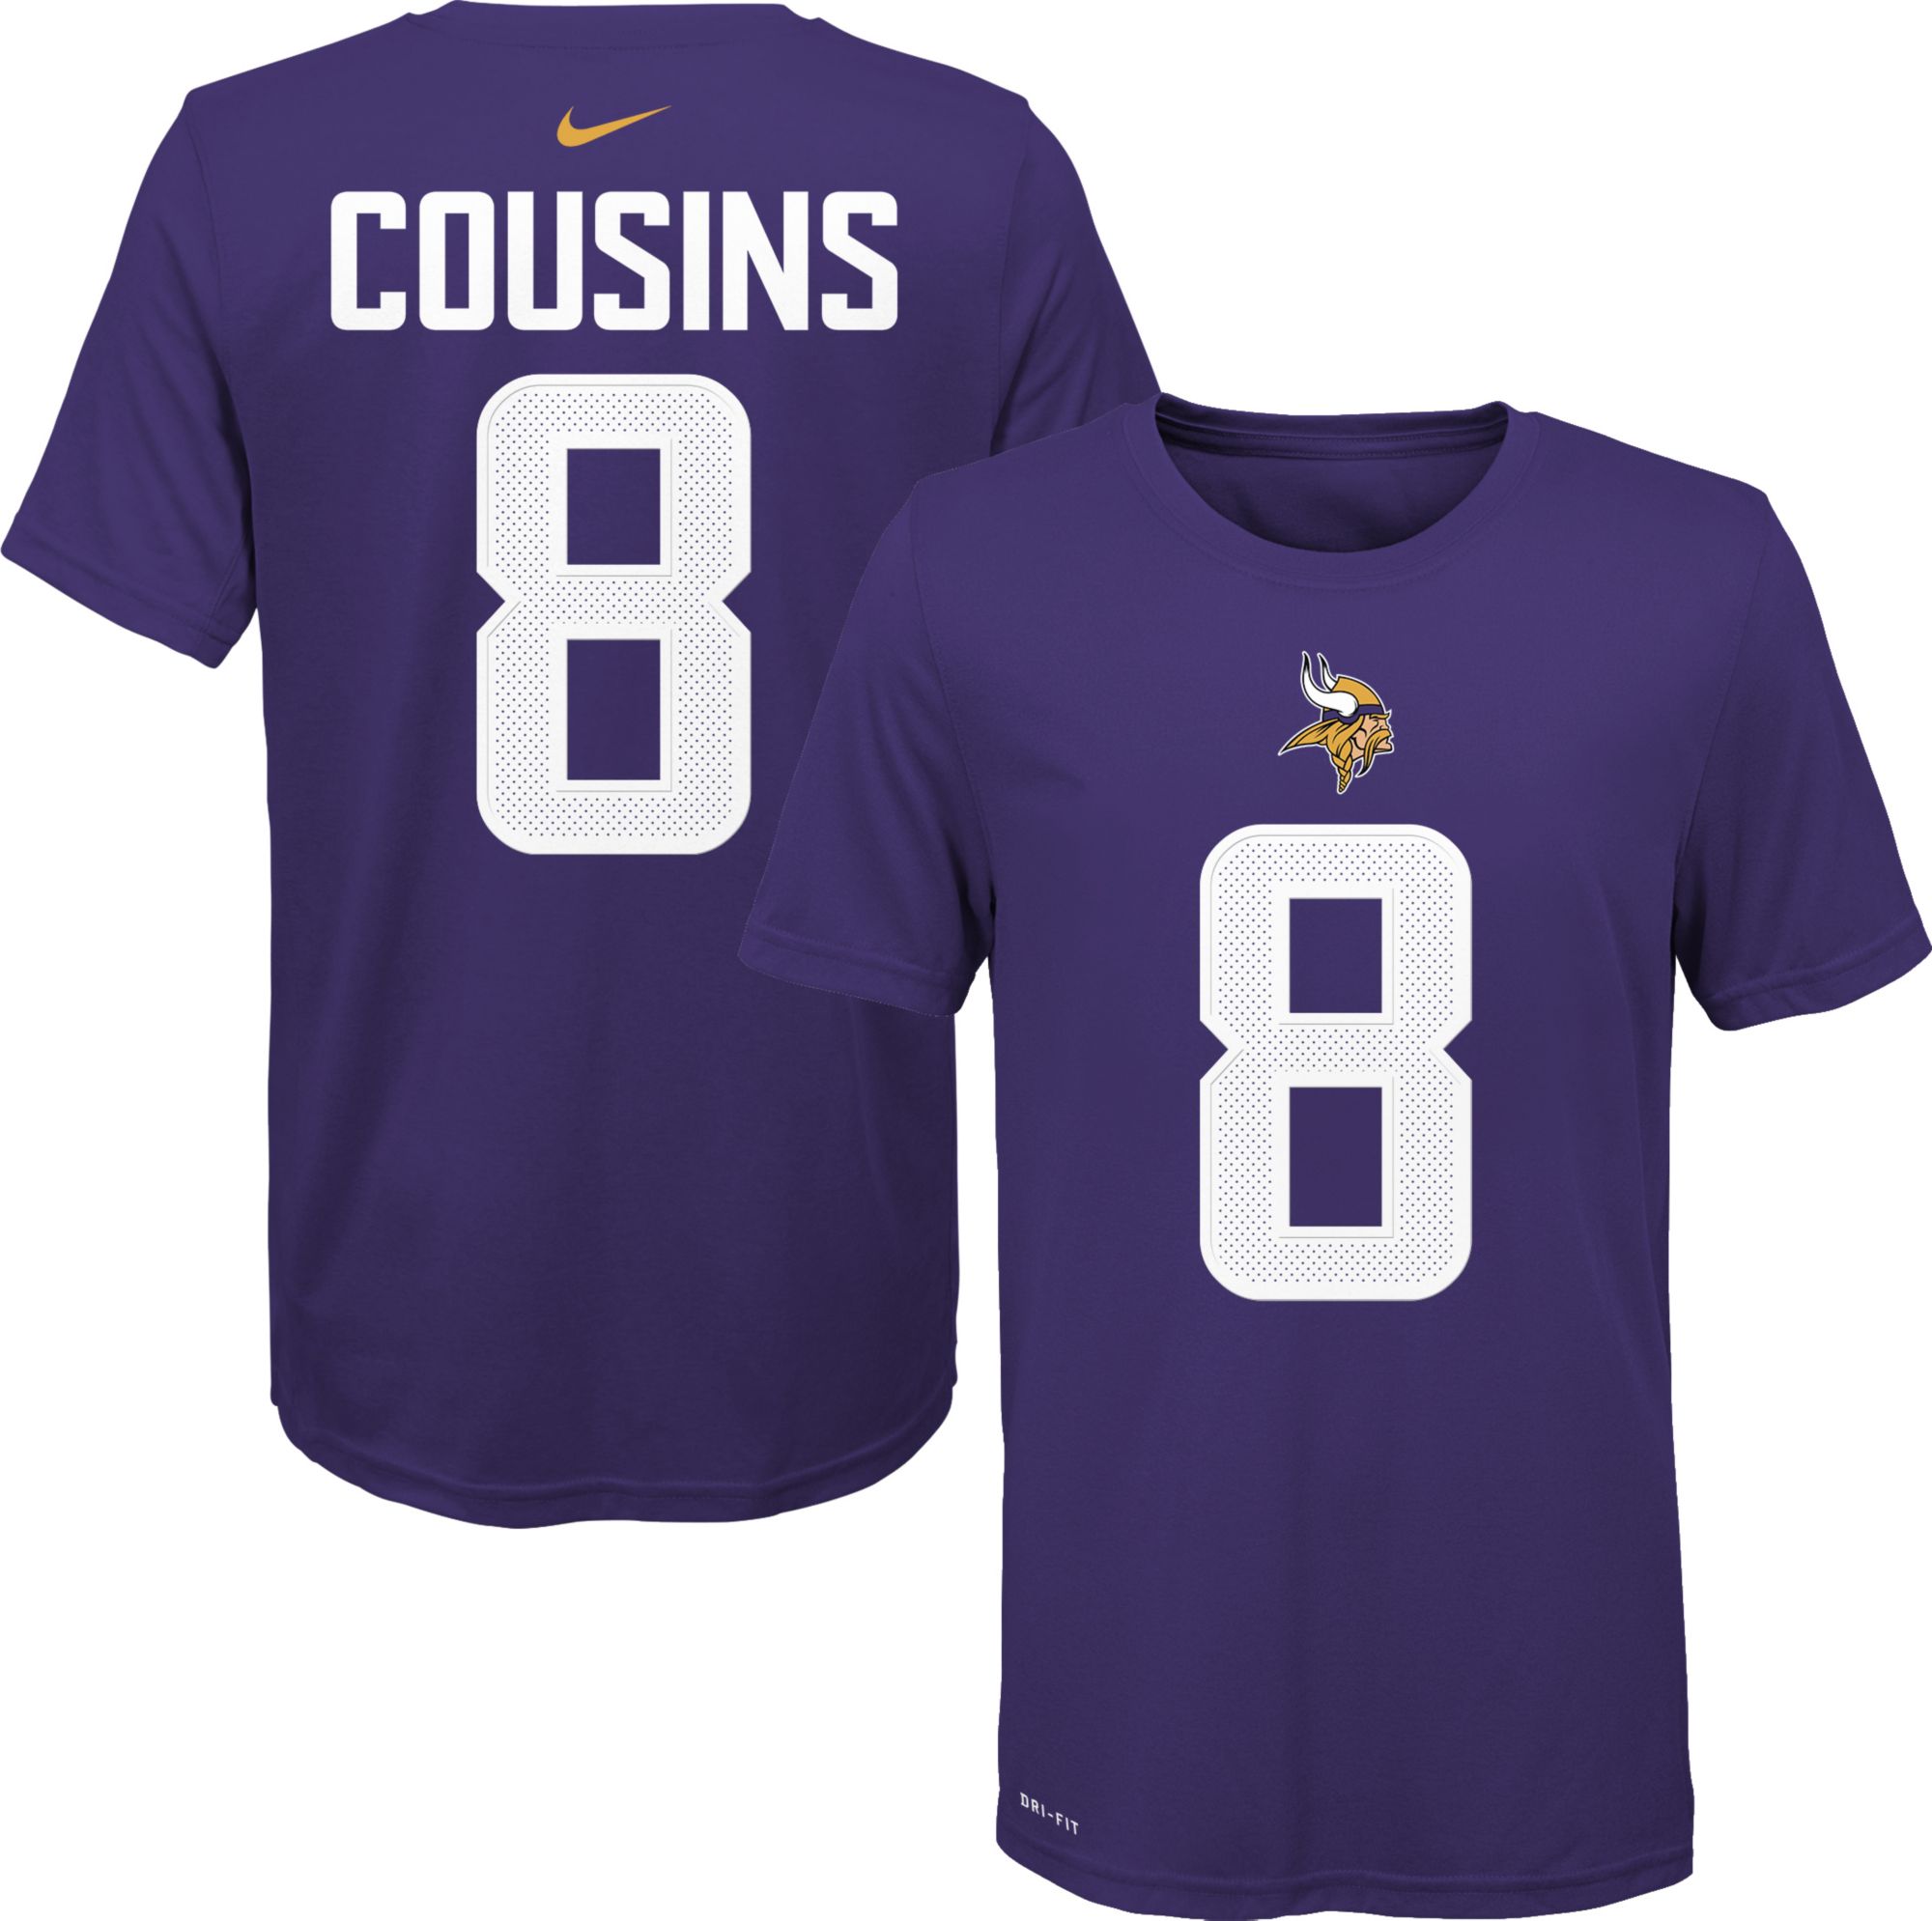 Nike / Youth Minnesota Vikings Kirk Cousins #8 Logo Purple T-Shirt